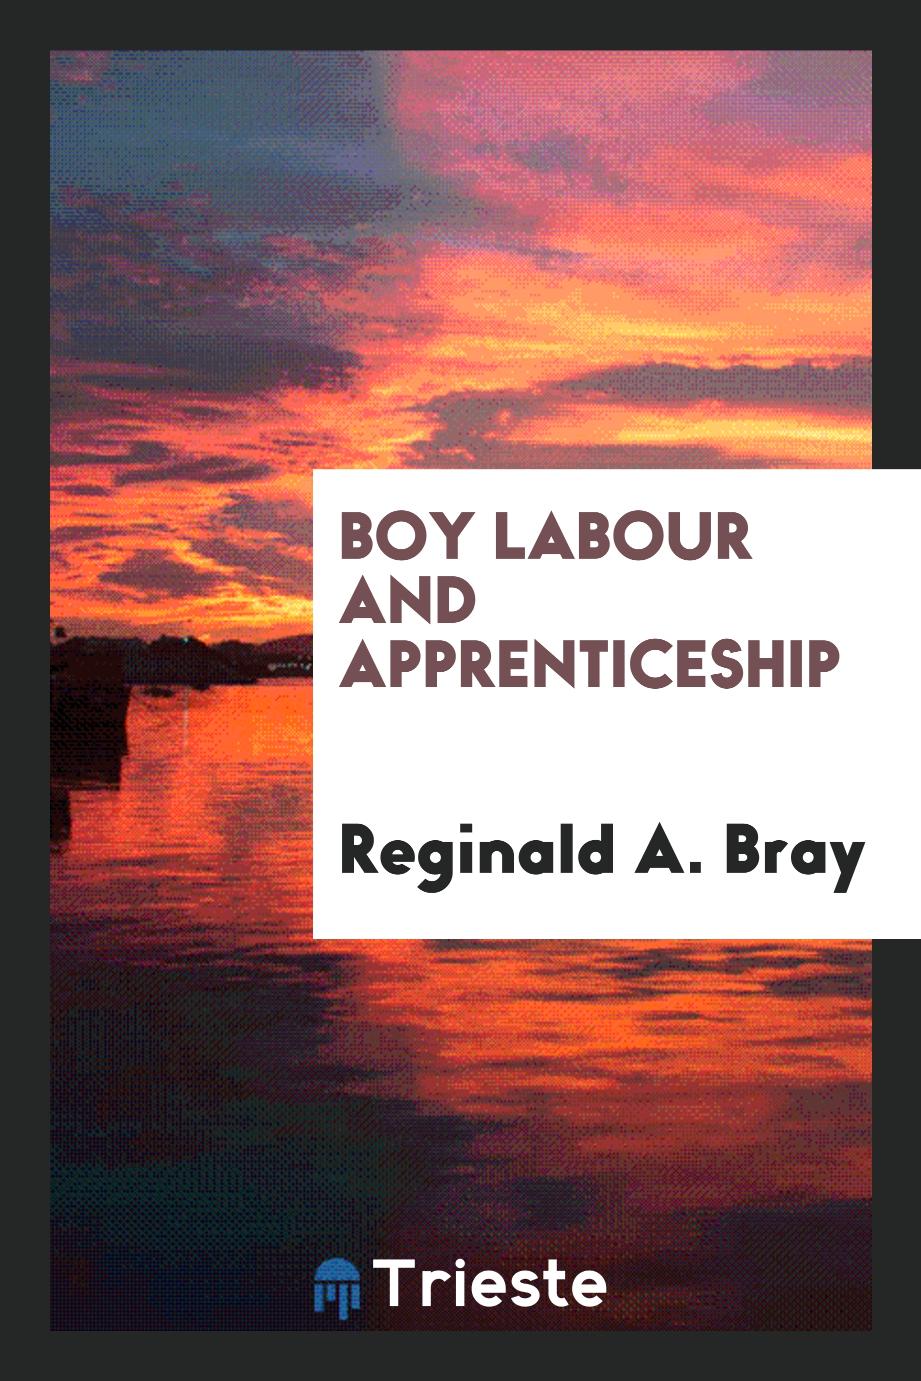 Boy labour and apprenticeship